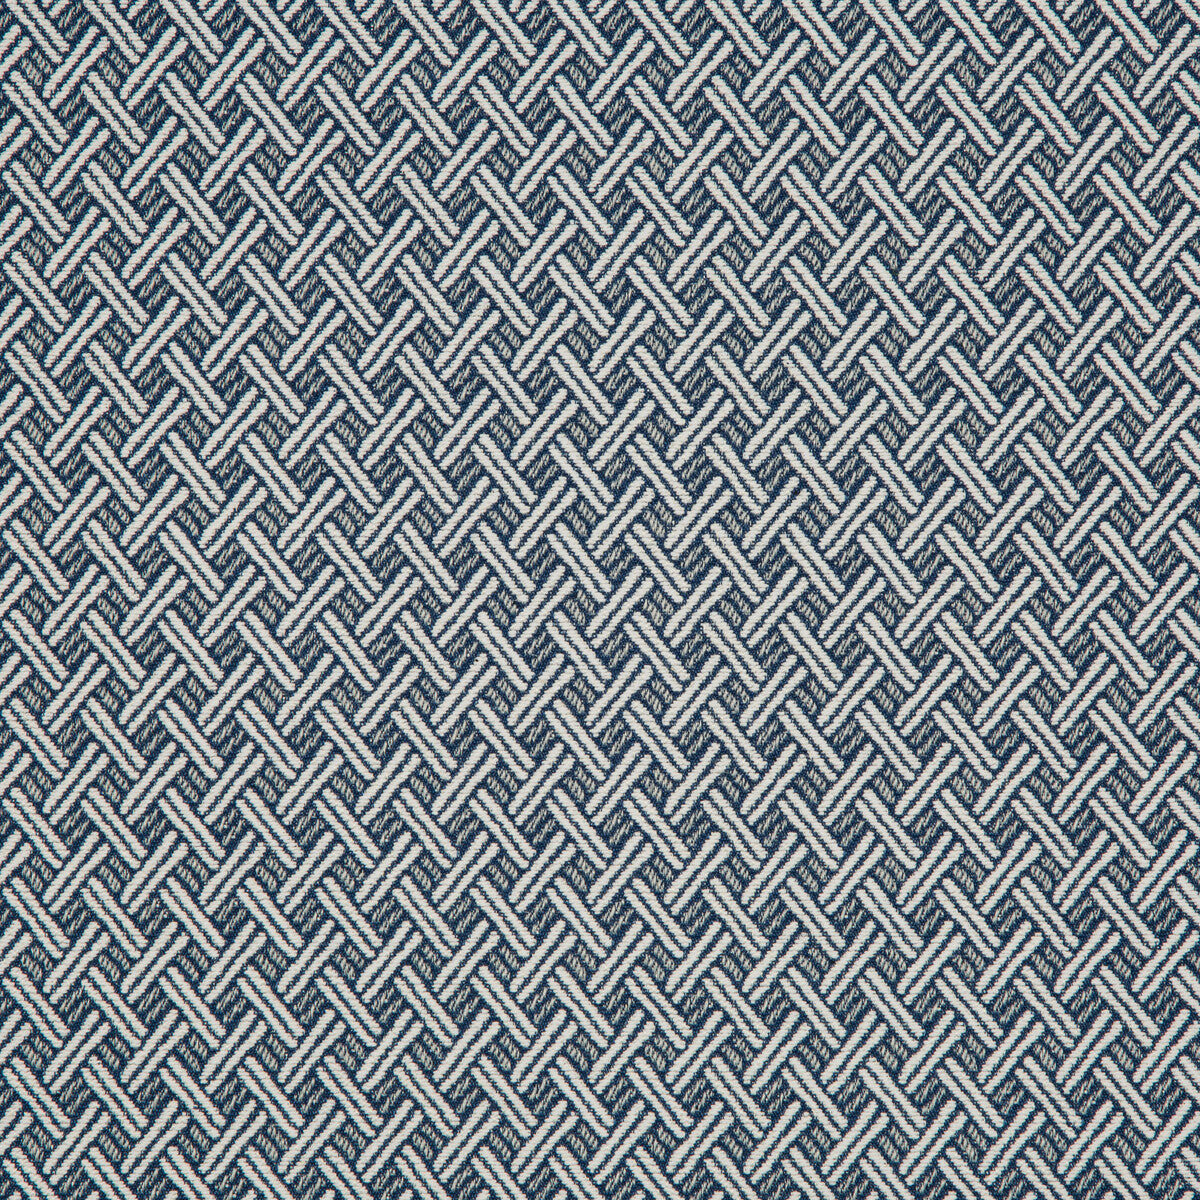 Kravet Smart fabric in 35938-51 color - pattern 35938.51.0 - by Kravet Smart in the Performance Kravetarmor collection